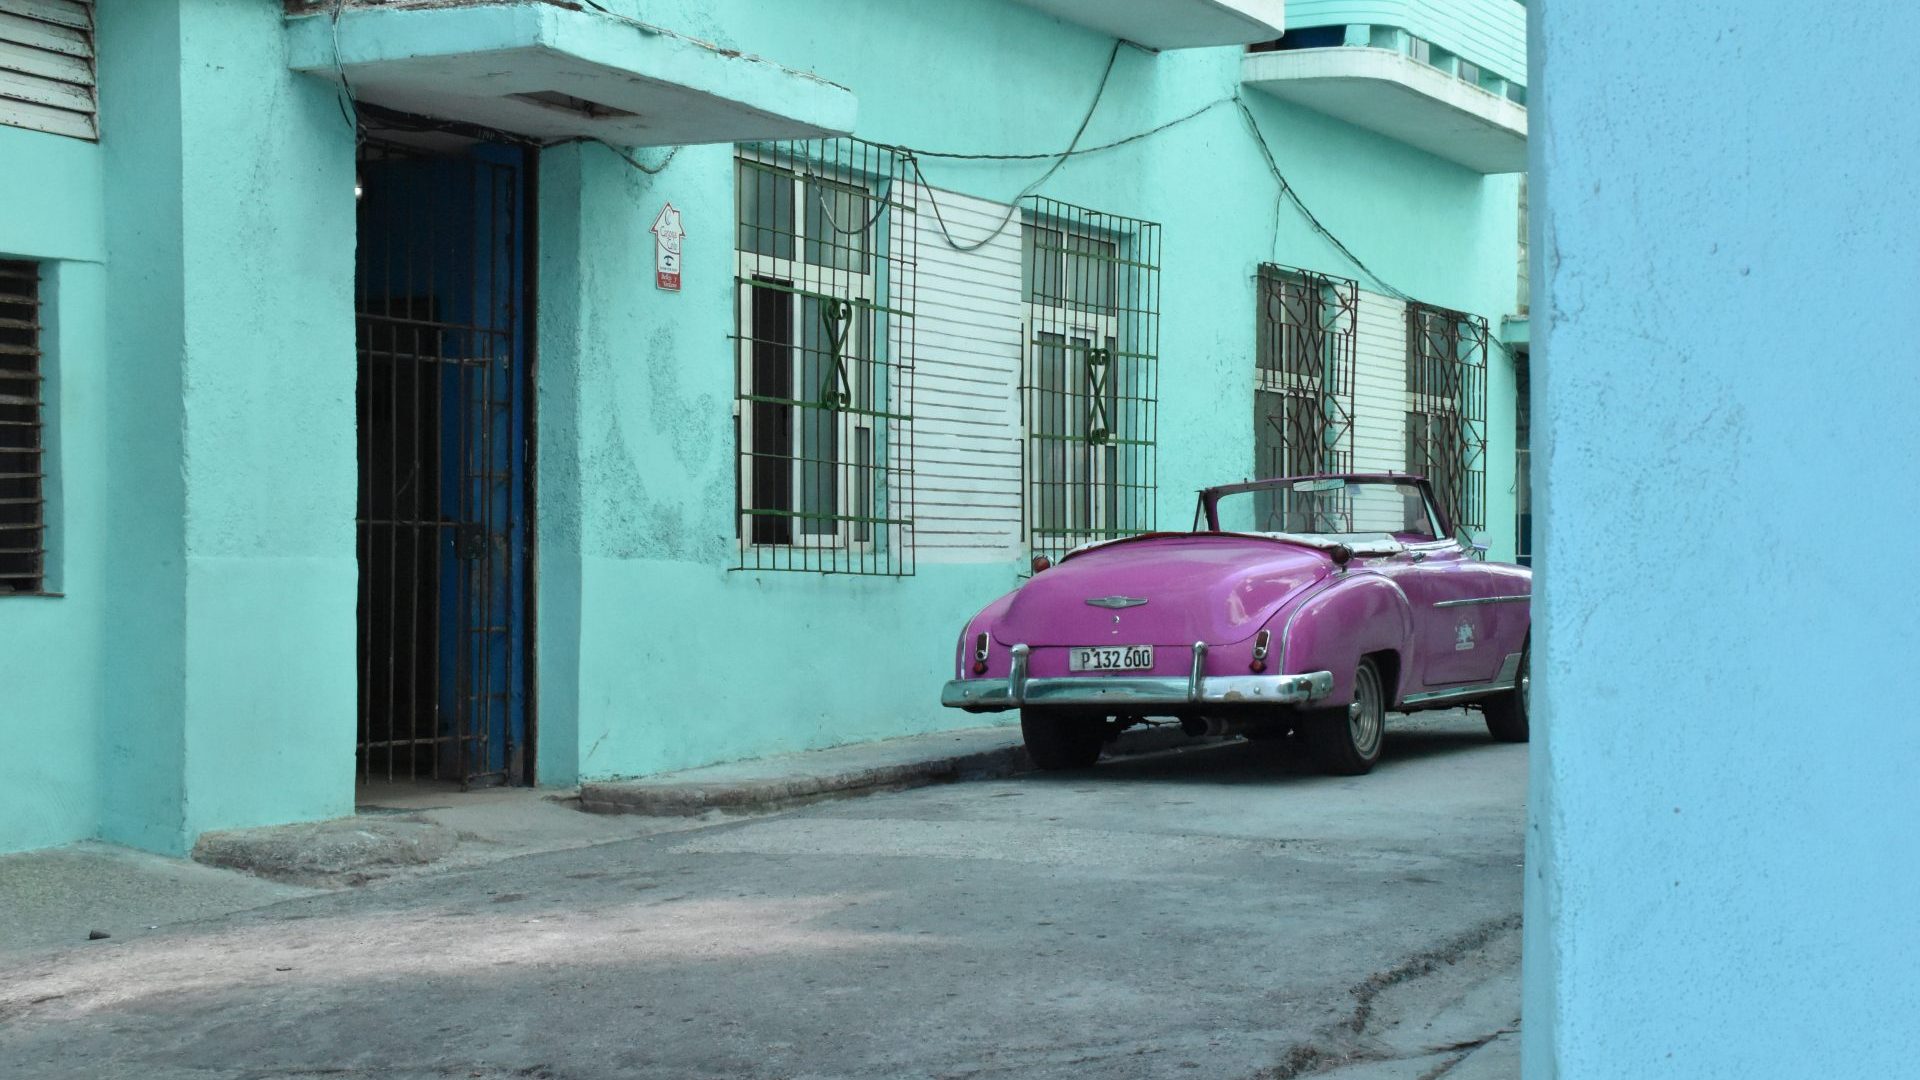 Travel tips for Cuba Caliente